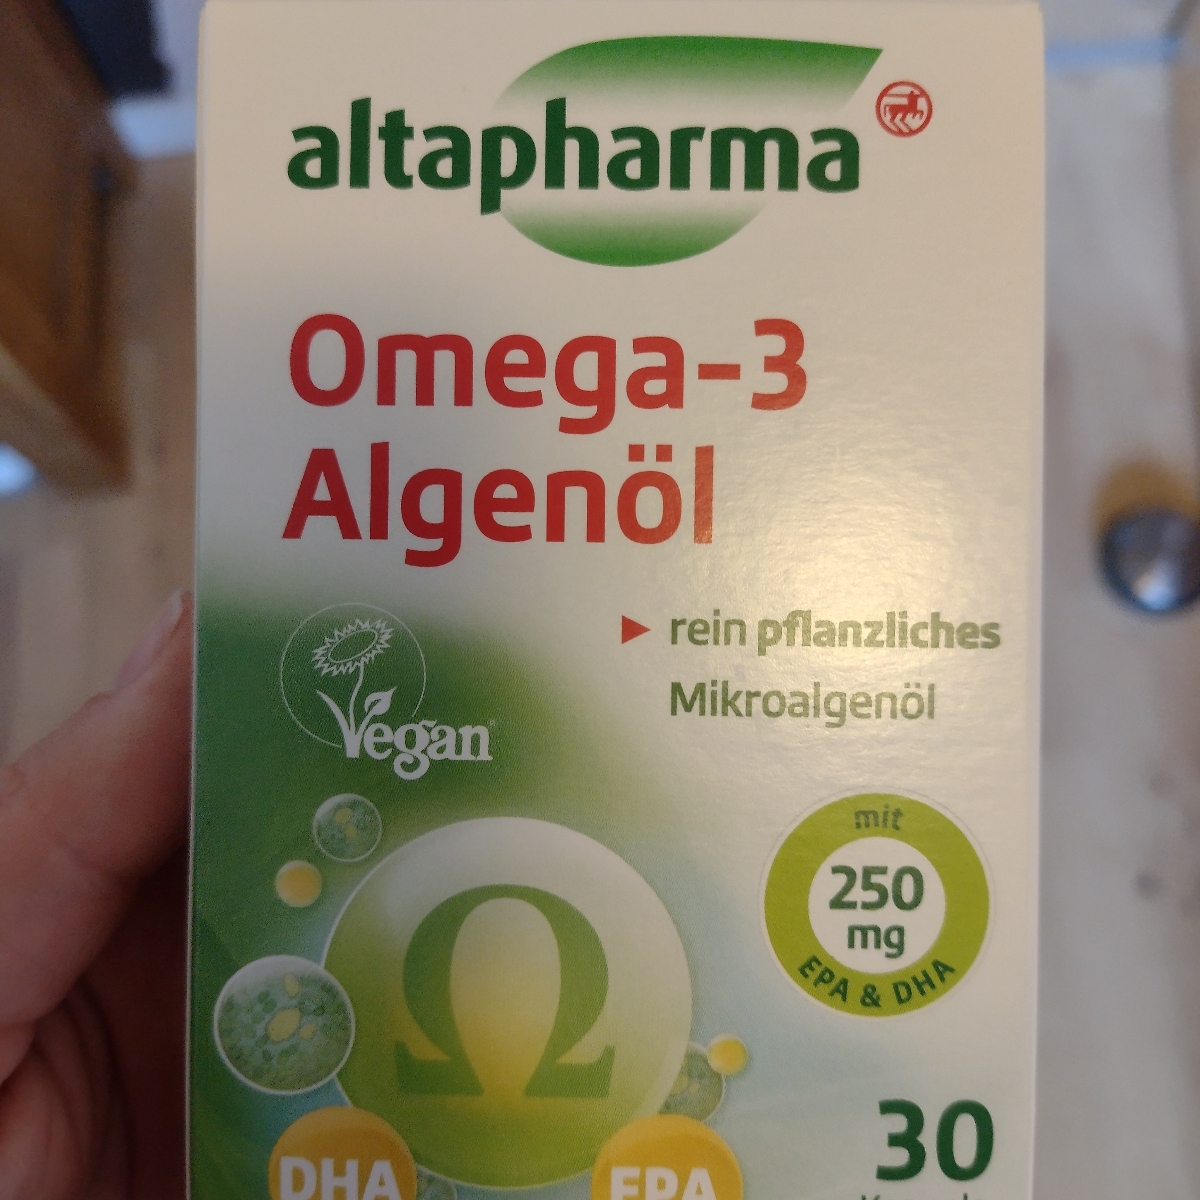 Altapharma Omega-3 Algenöl Review | abillion